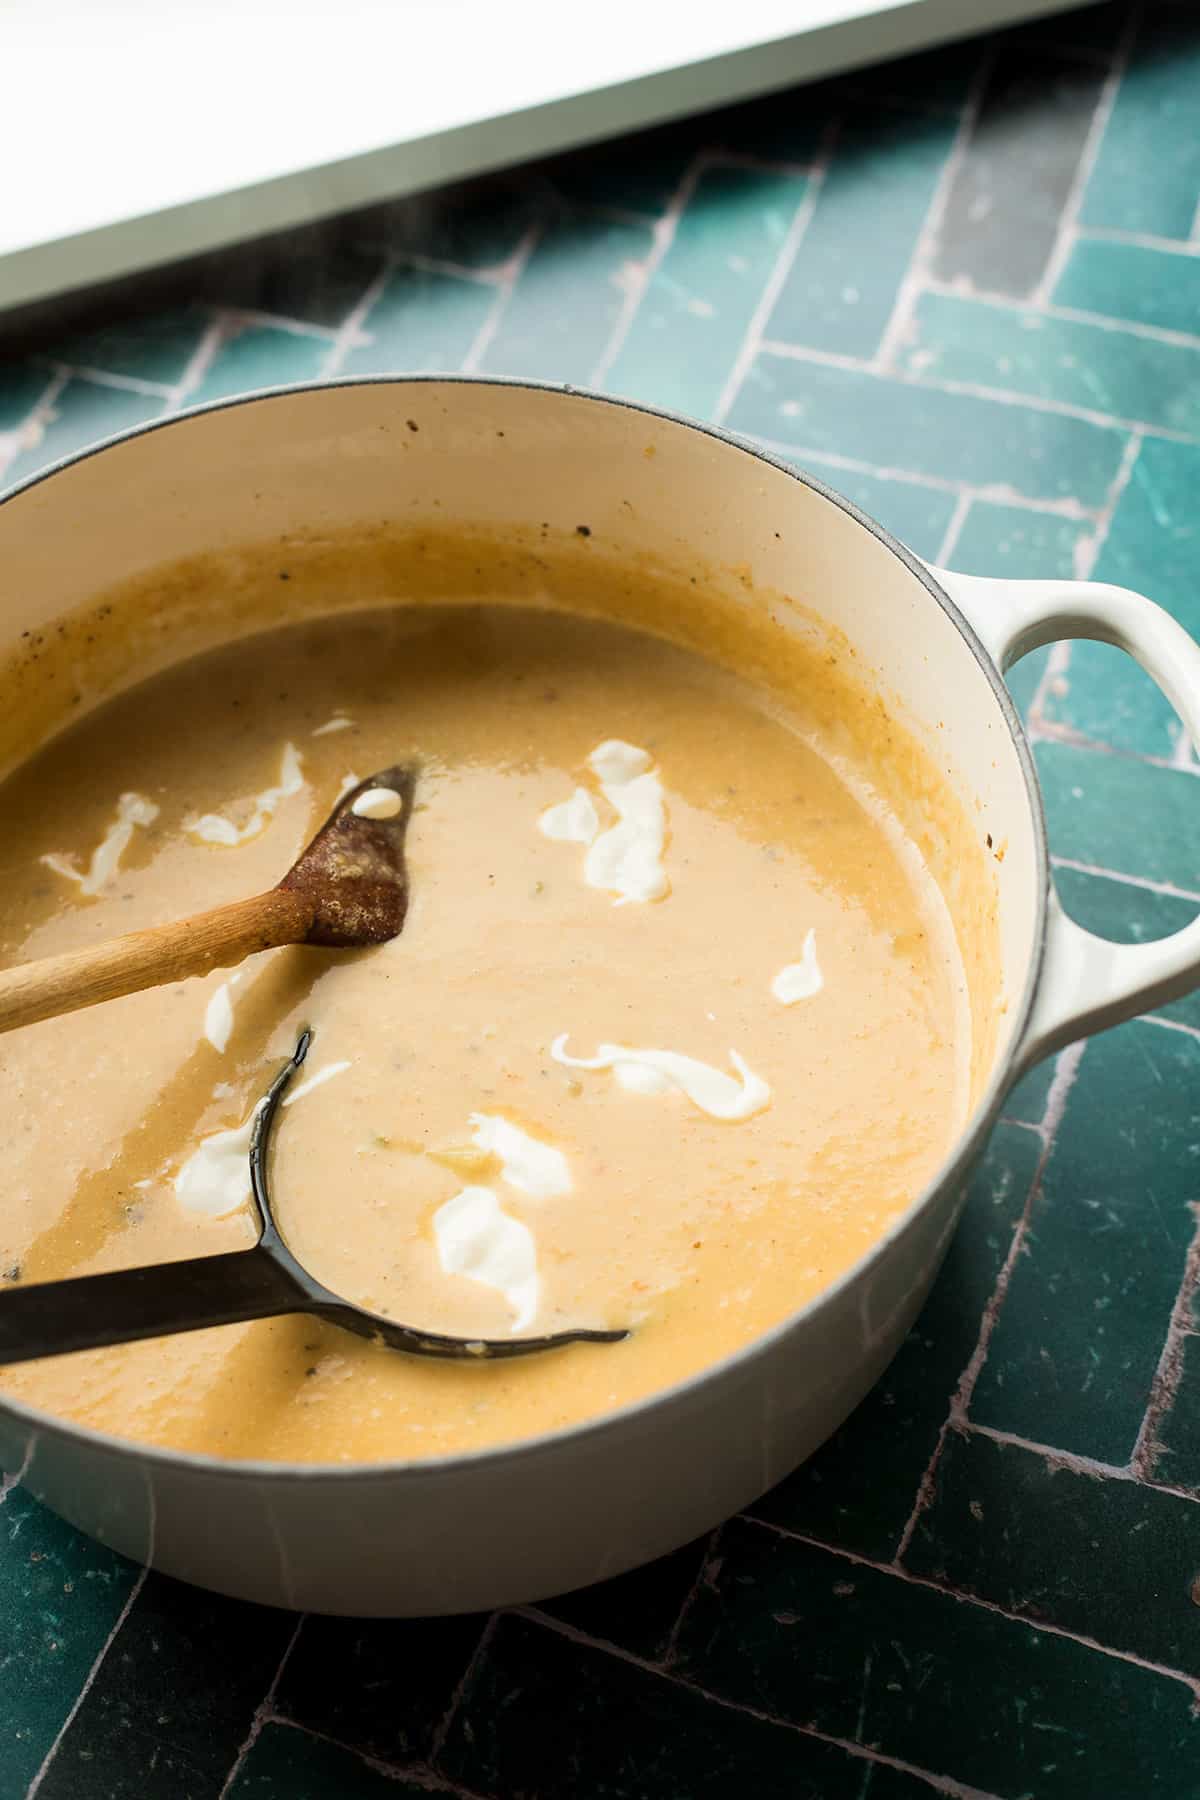 Backlit casserole with potato soup.